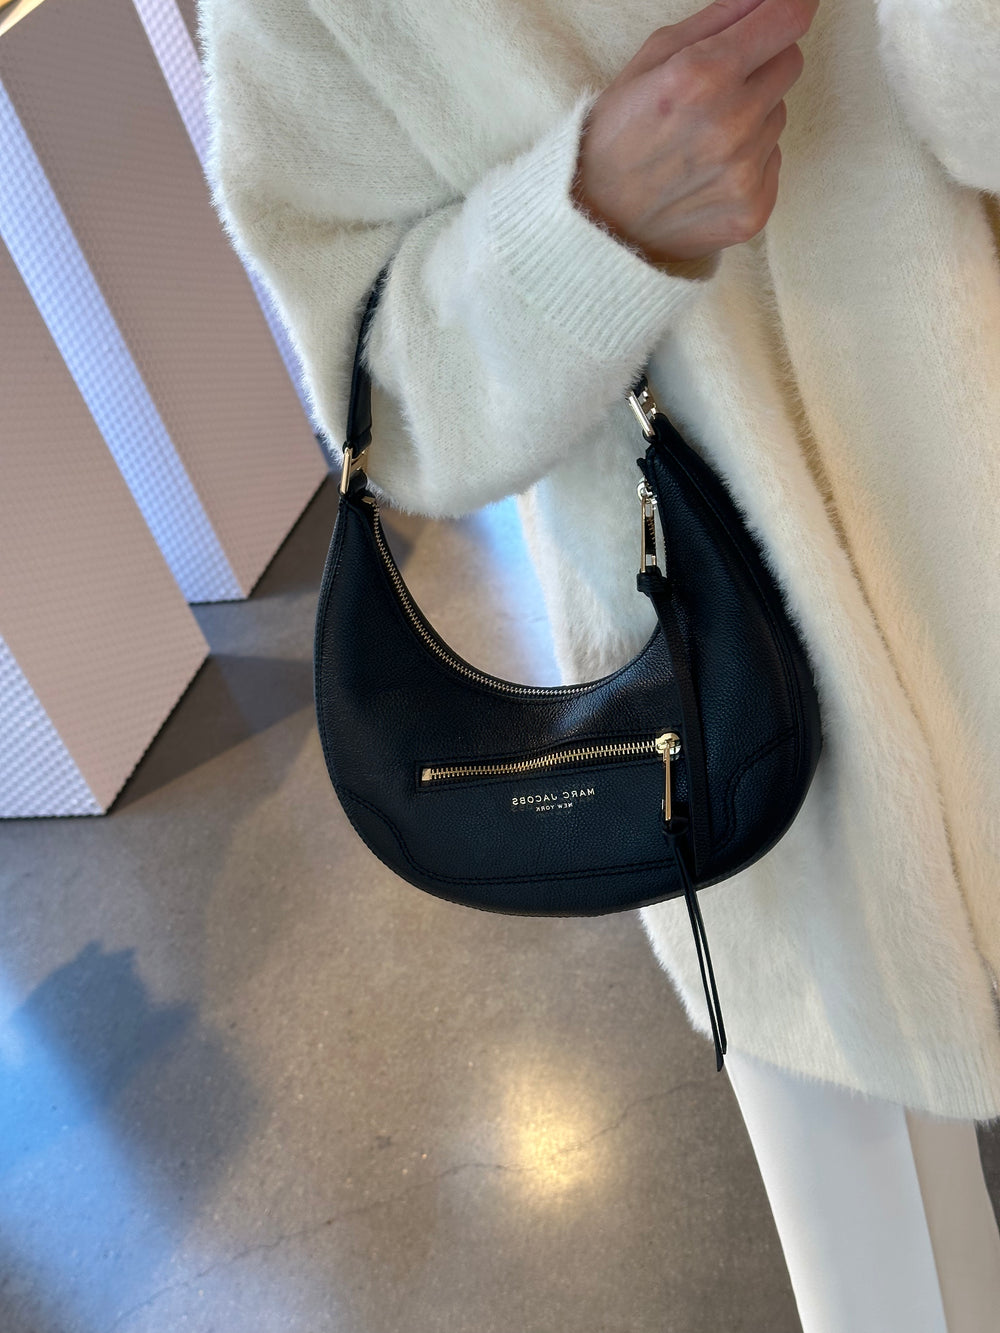 Marc Jacobs Avenue Crossbody Bag